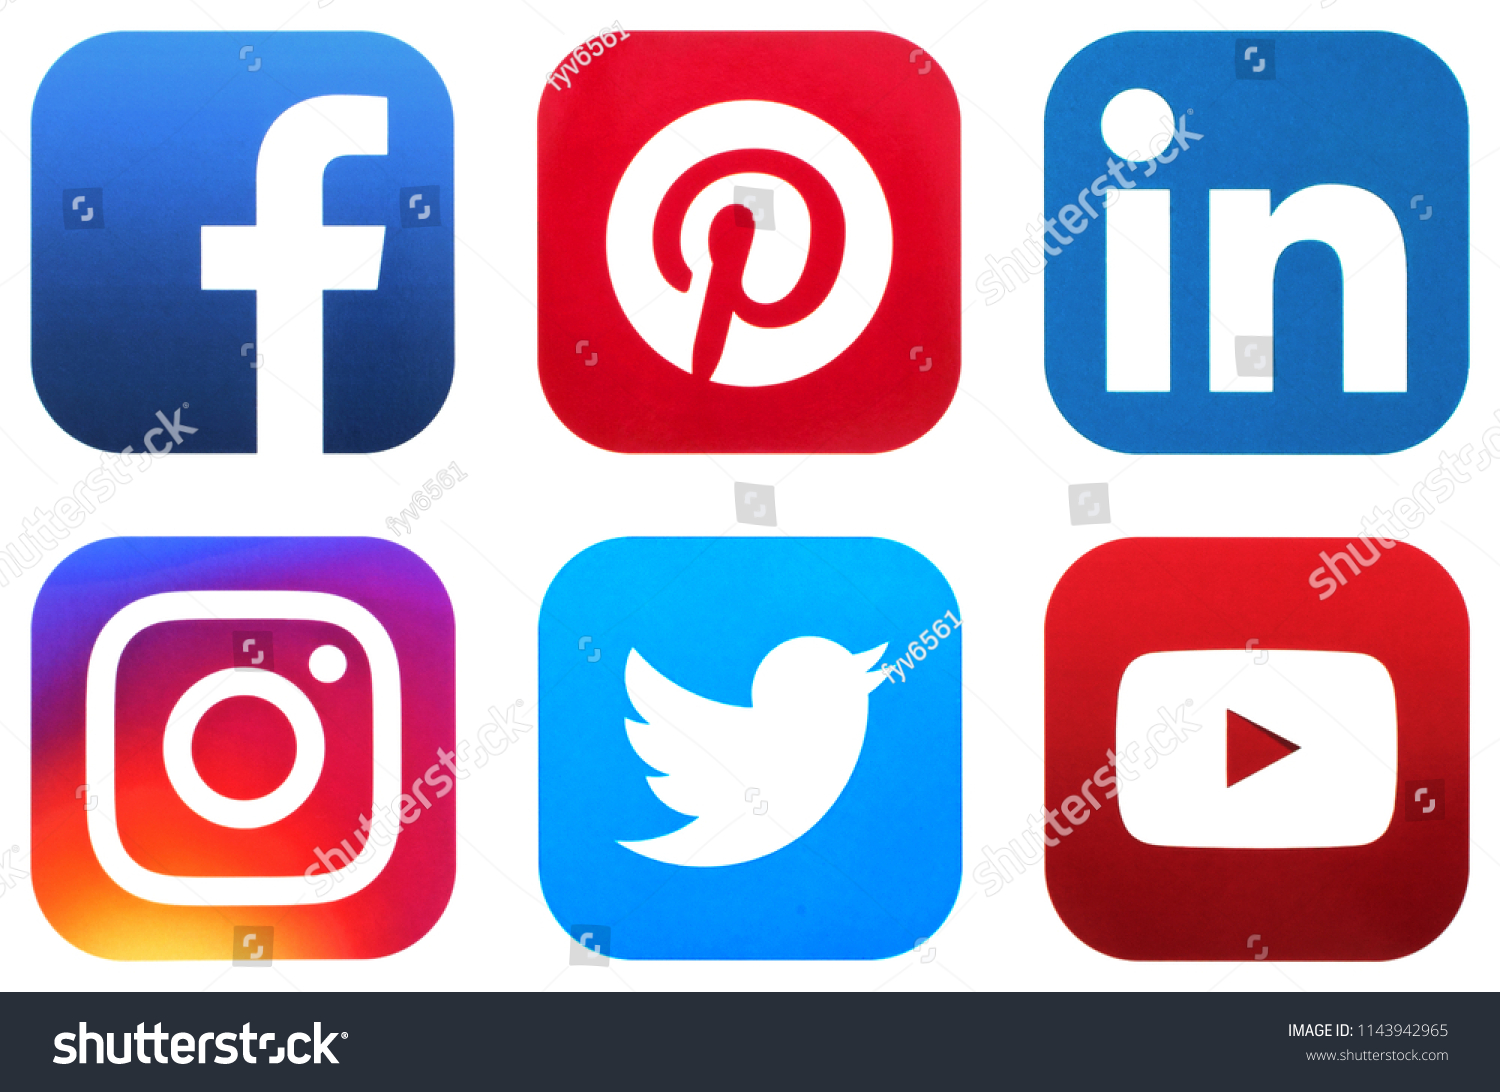 12,335 Social media logos 2018 Images, Stock Photos & Vectors ...